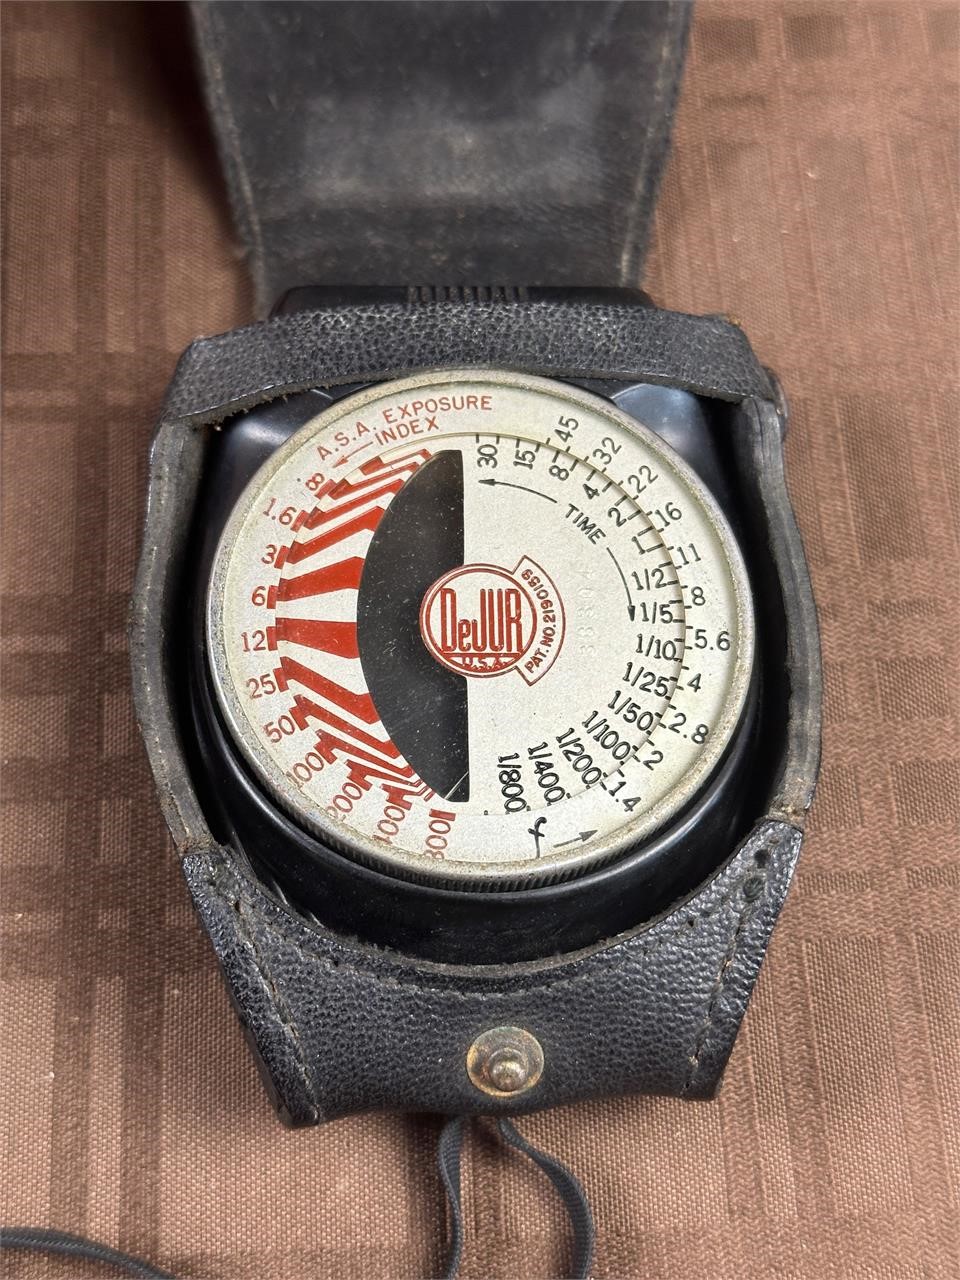 DeJur Model 50 Photoelectric Exposure Meter